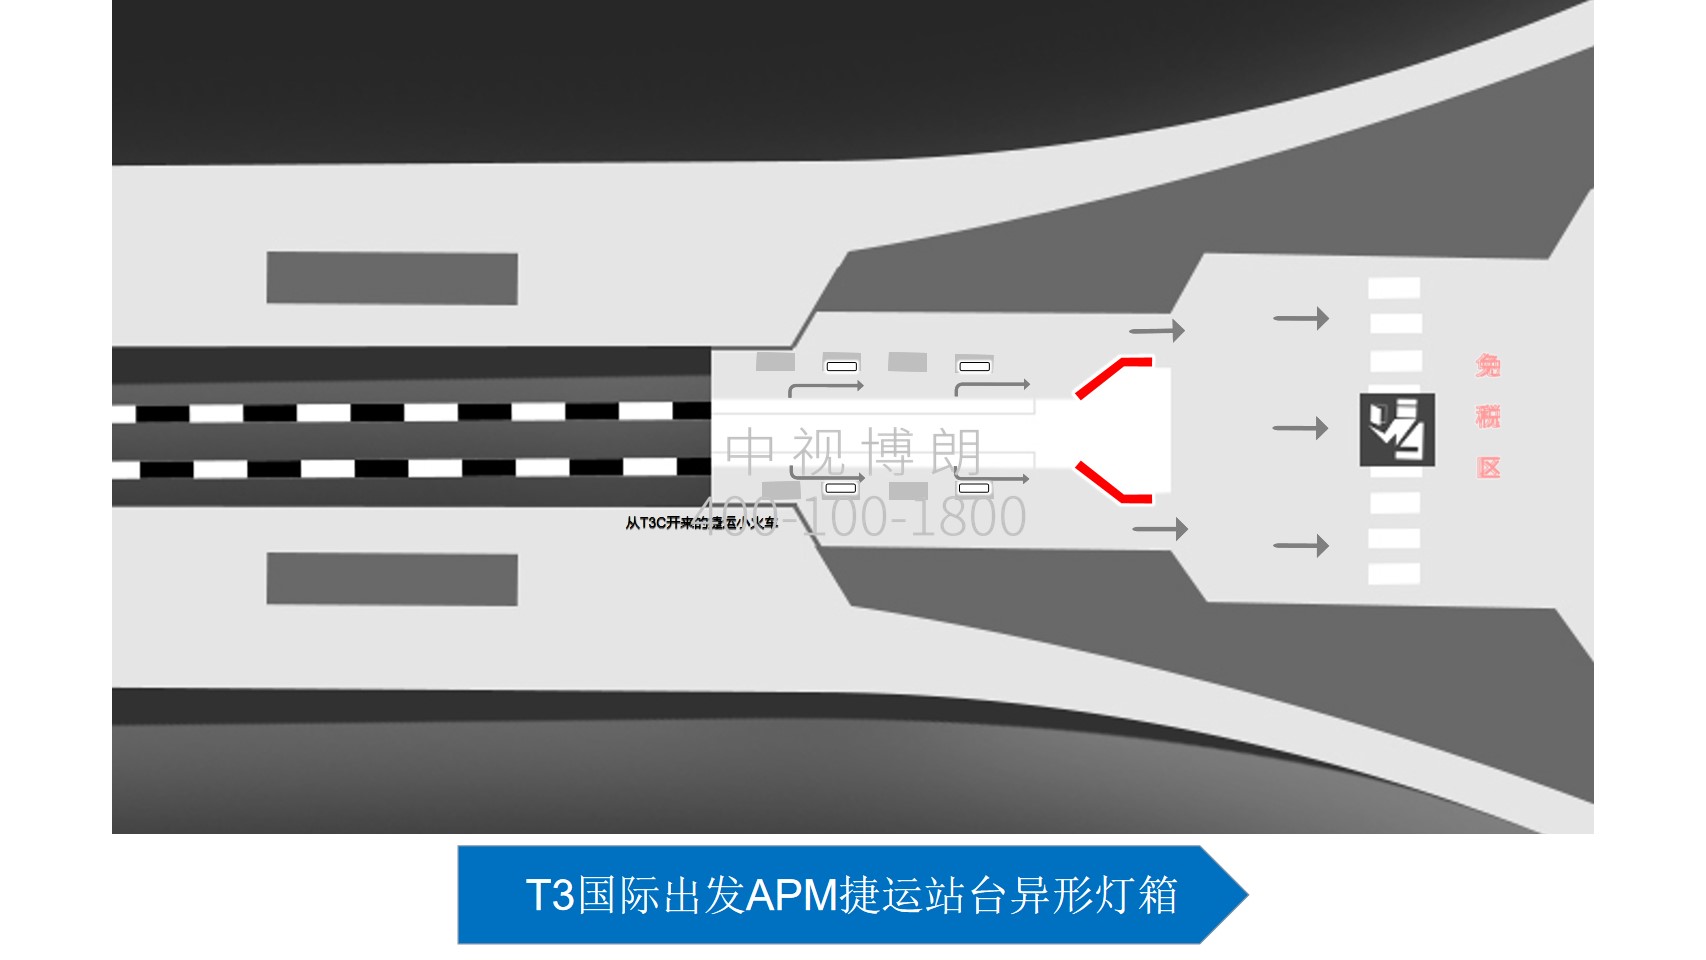 北京首都机场广告-T3 International Departure MRT Platform Irregular Light Box位置图